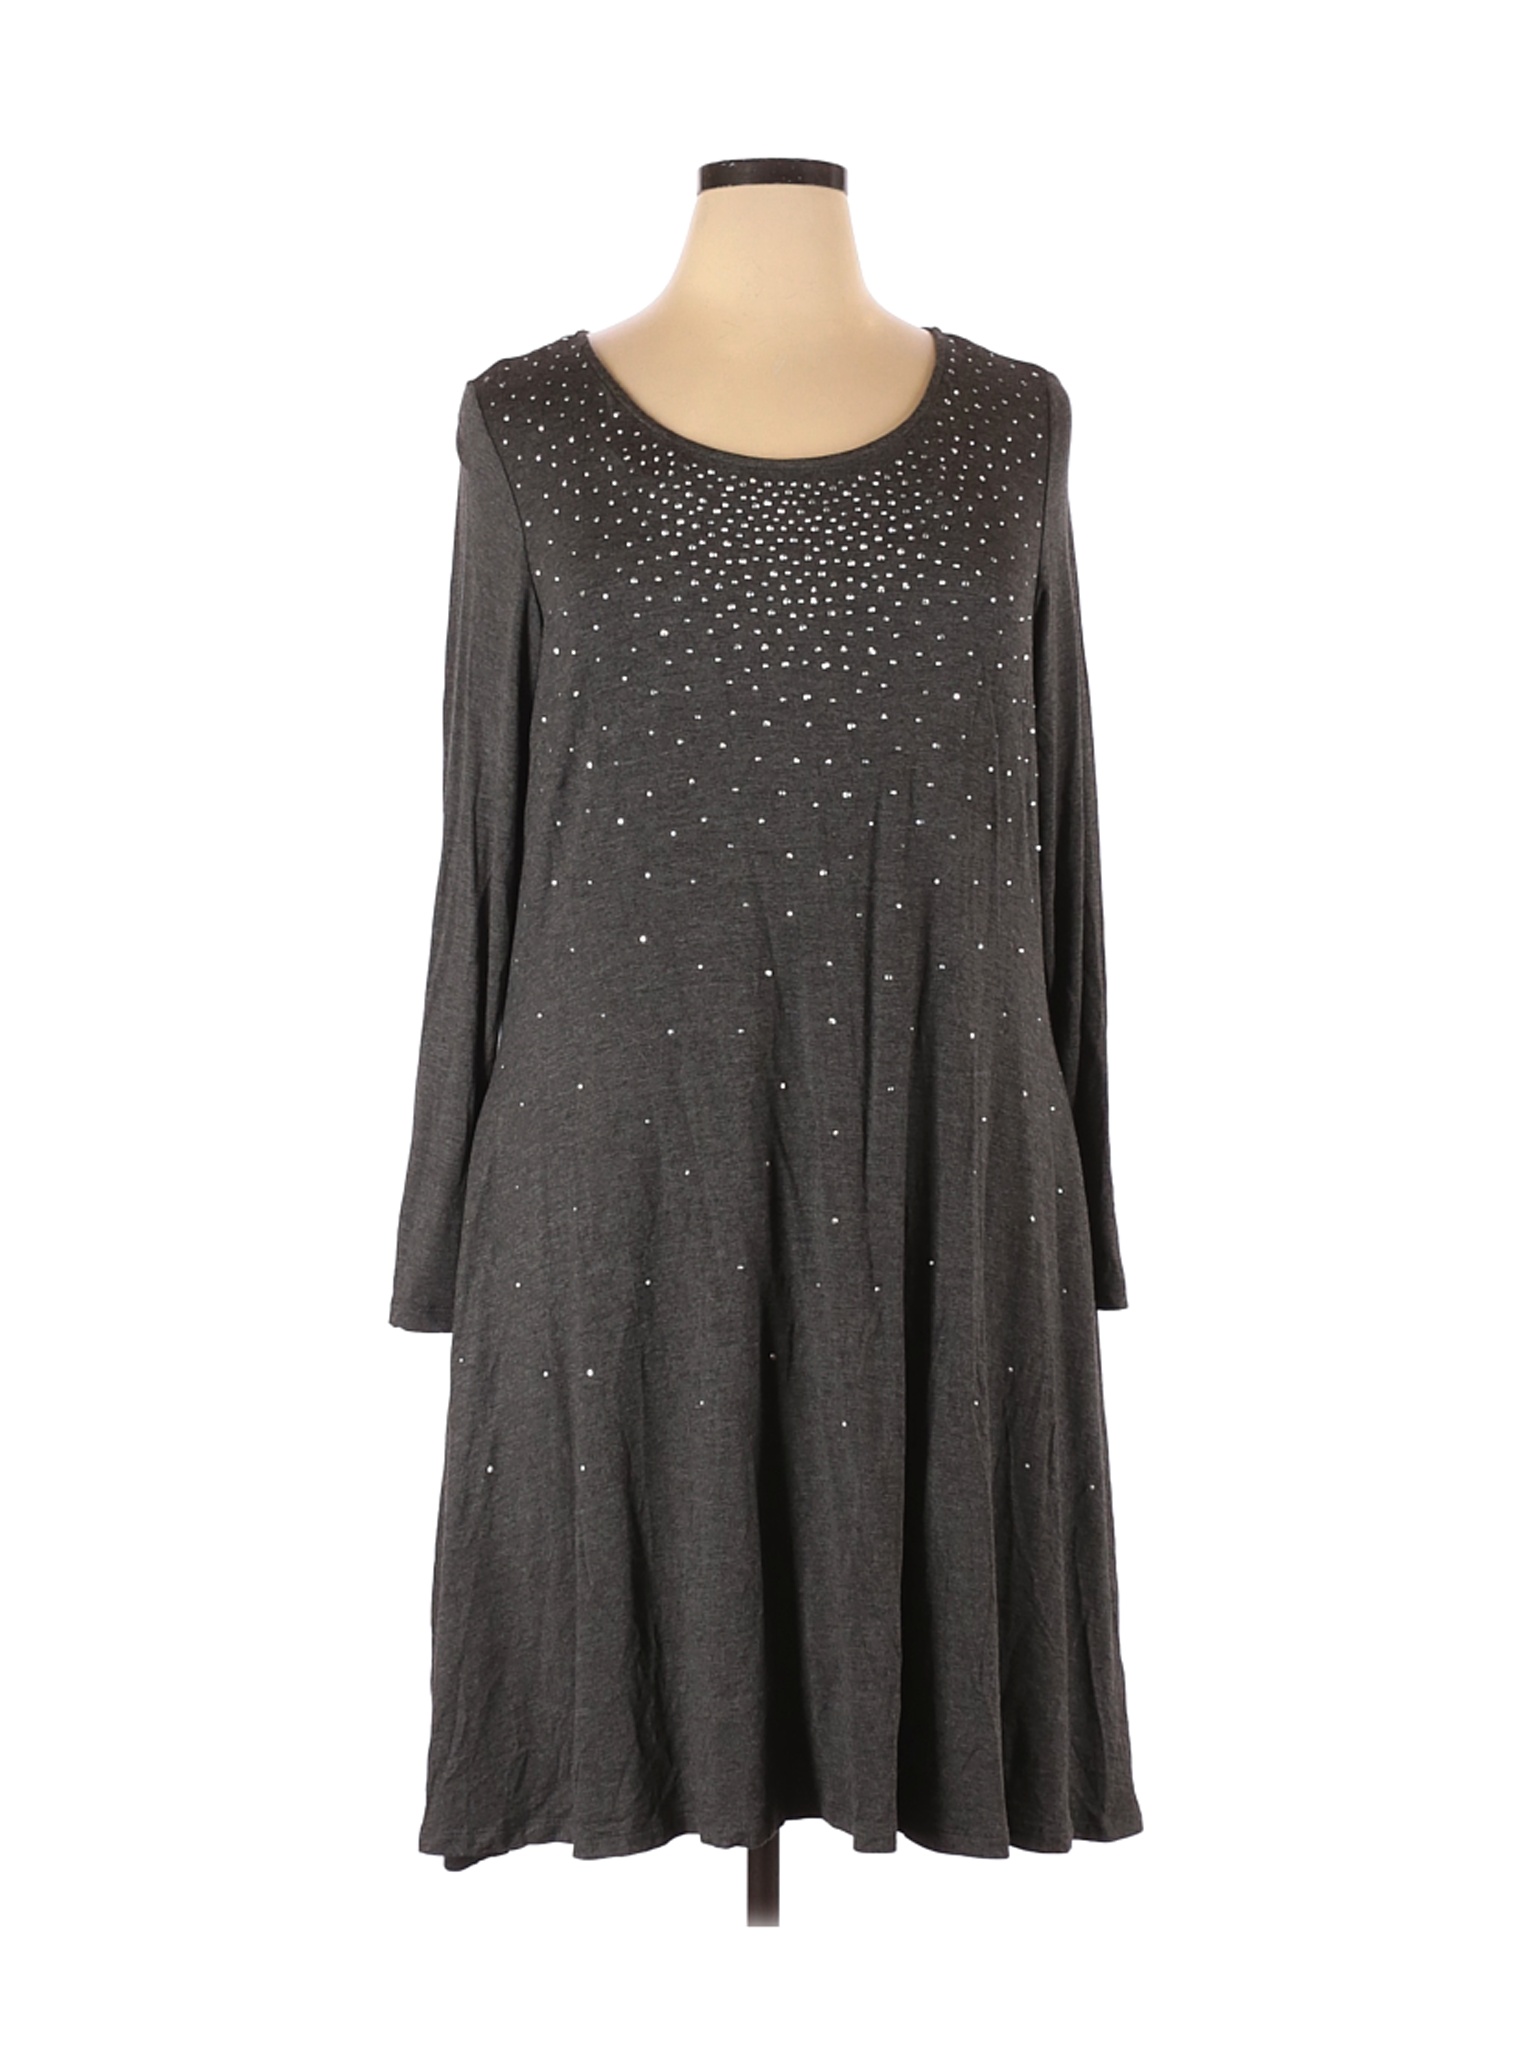 Nina Leonard Women Gray Casual Dress 1X Plus | eBay